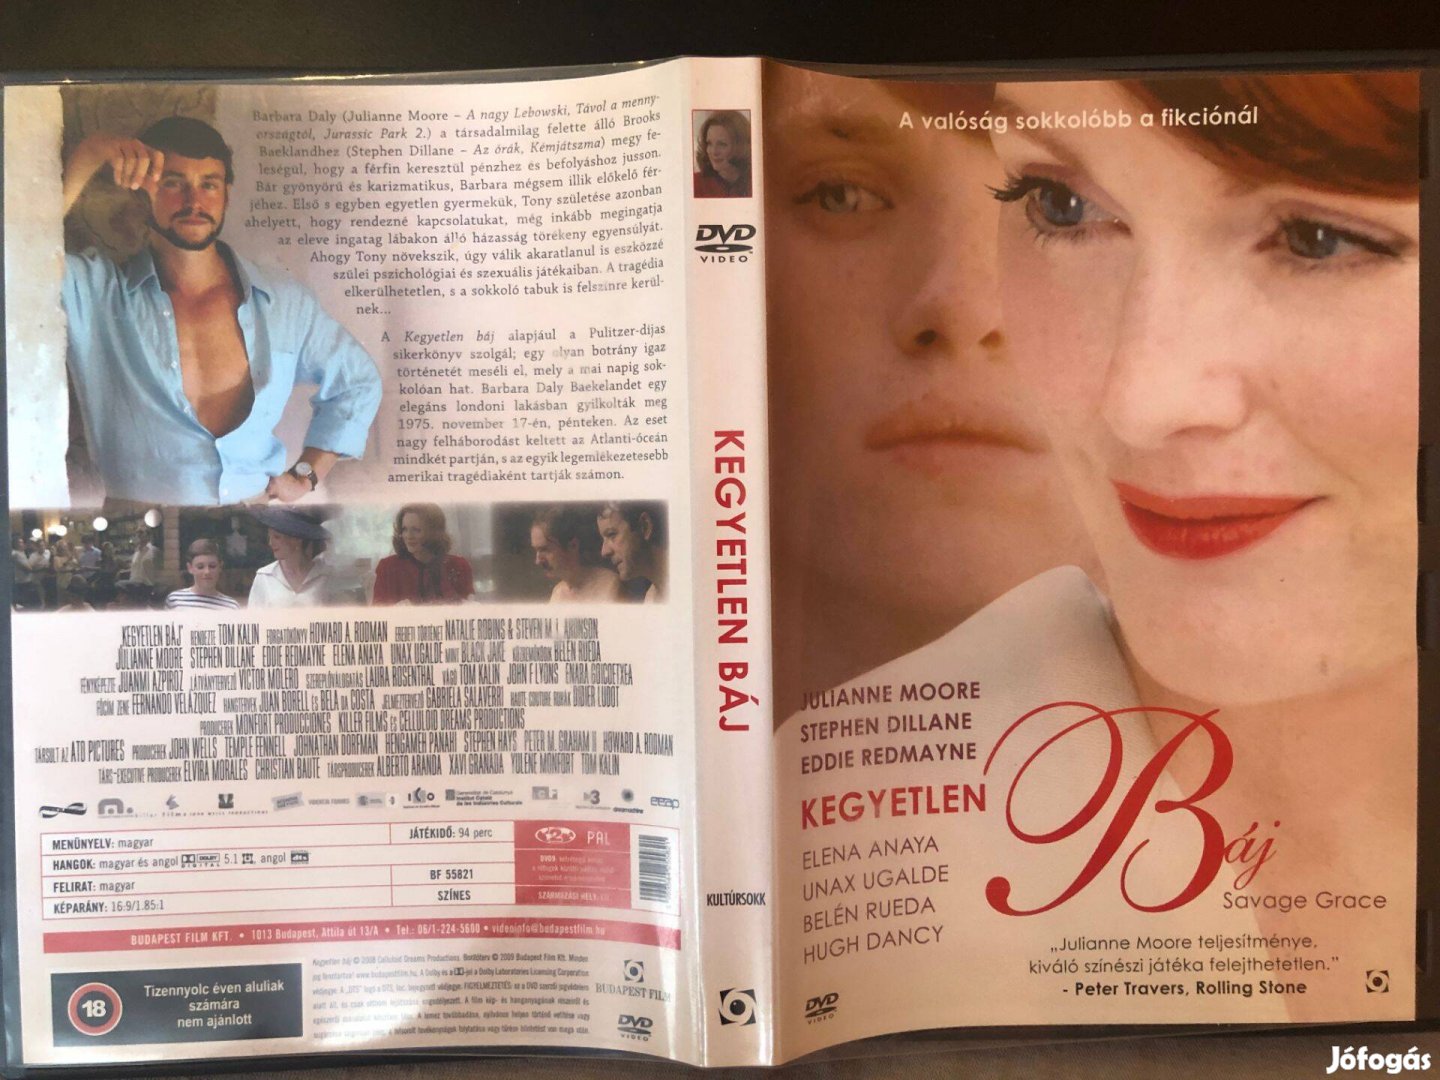 Kegyetlen báj (ritkaság, karcmentes, Julianne Moore) DVD